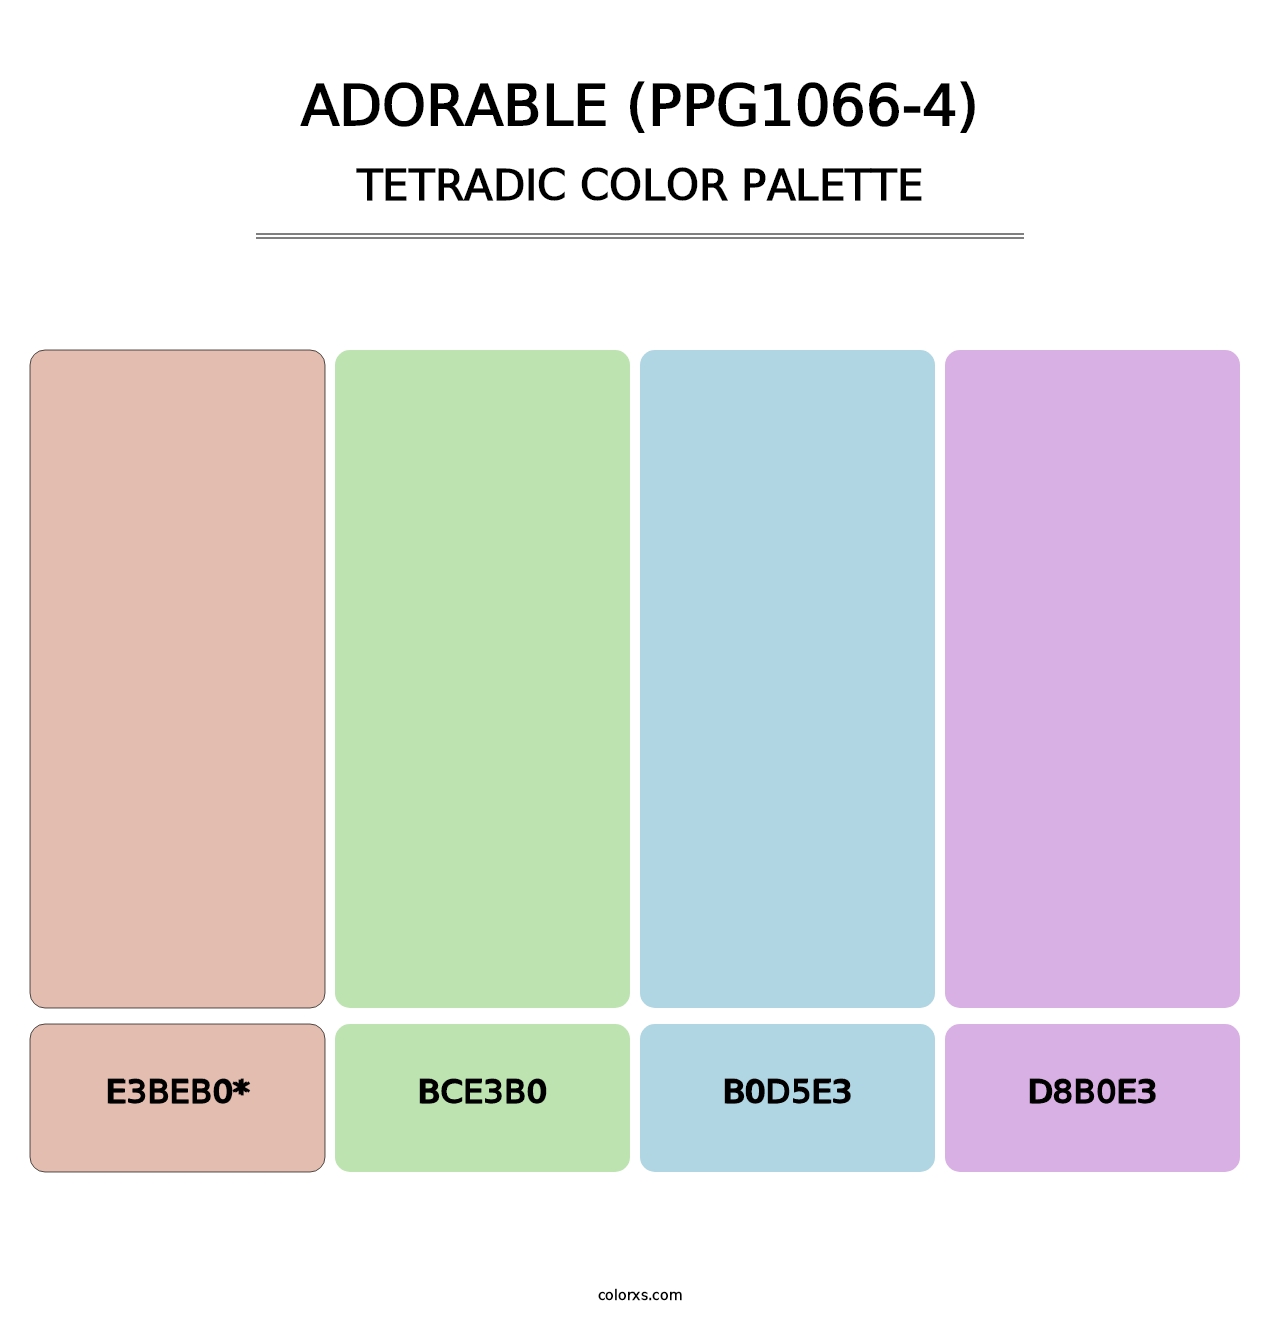 Adorable (PPG1066-4) - Tetradic Color Palette